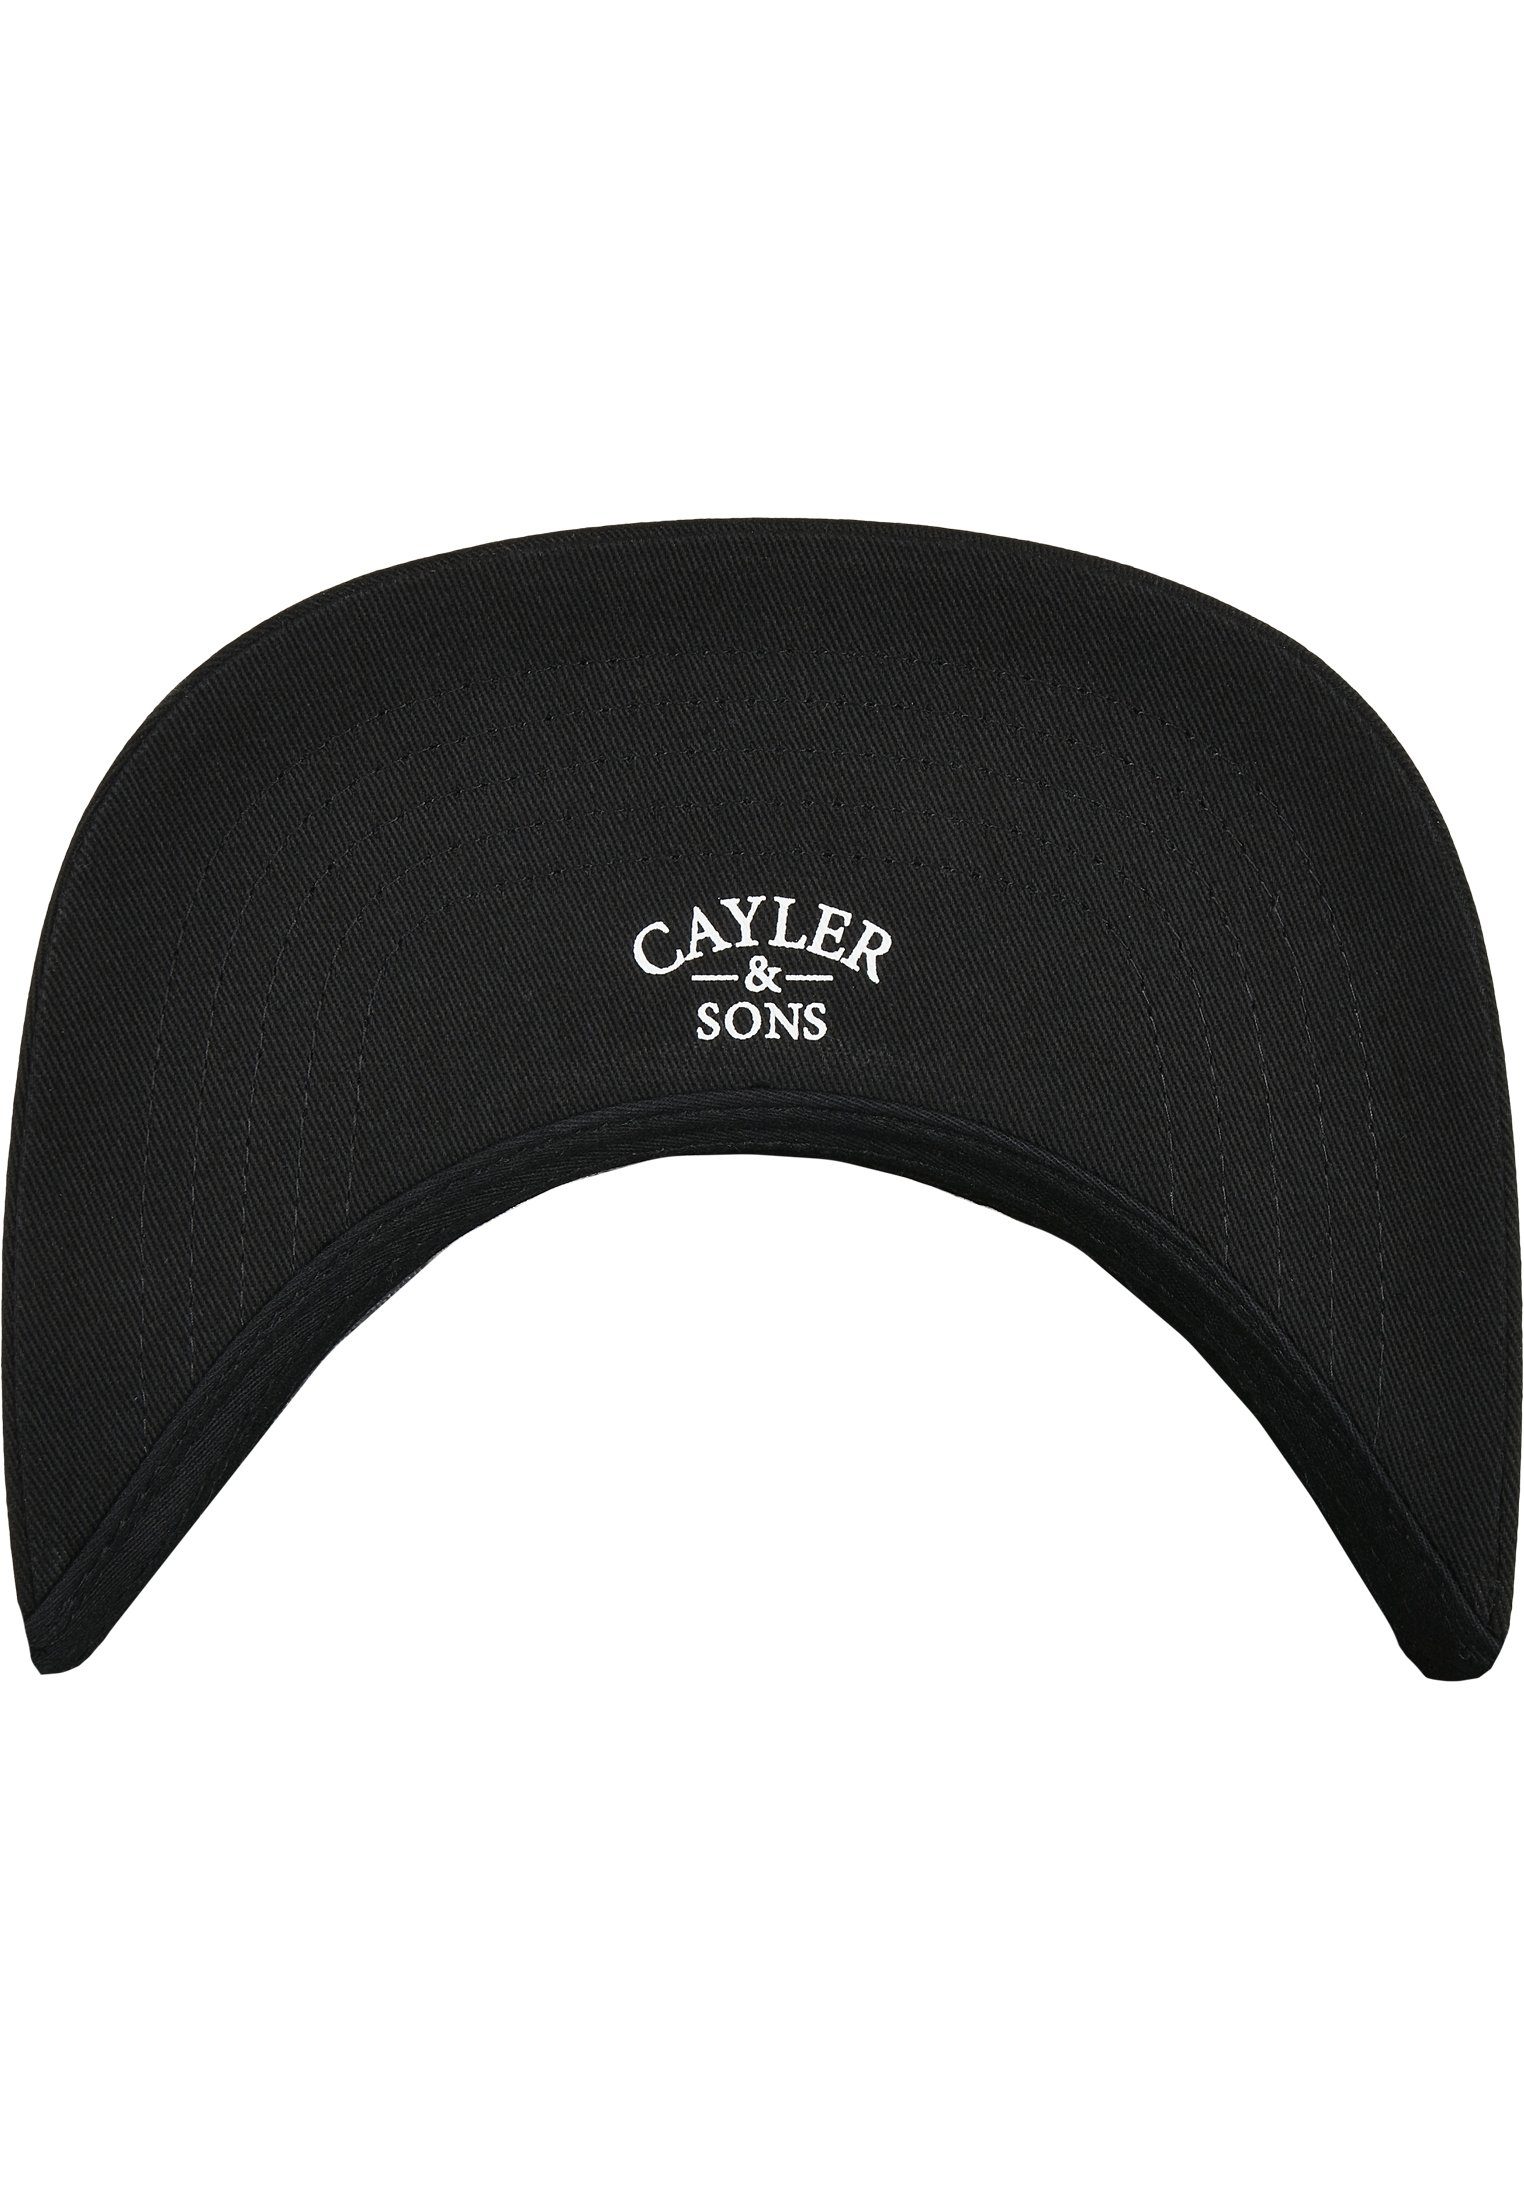 CAYLER & SONS Dark WL Flashin Cap Trucker Cap Flex C&S